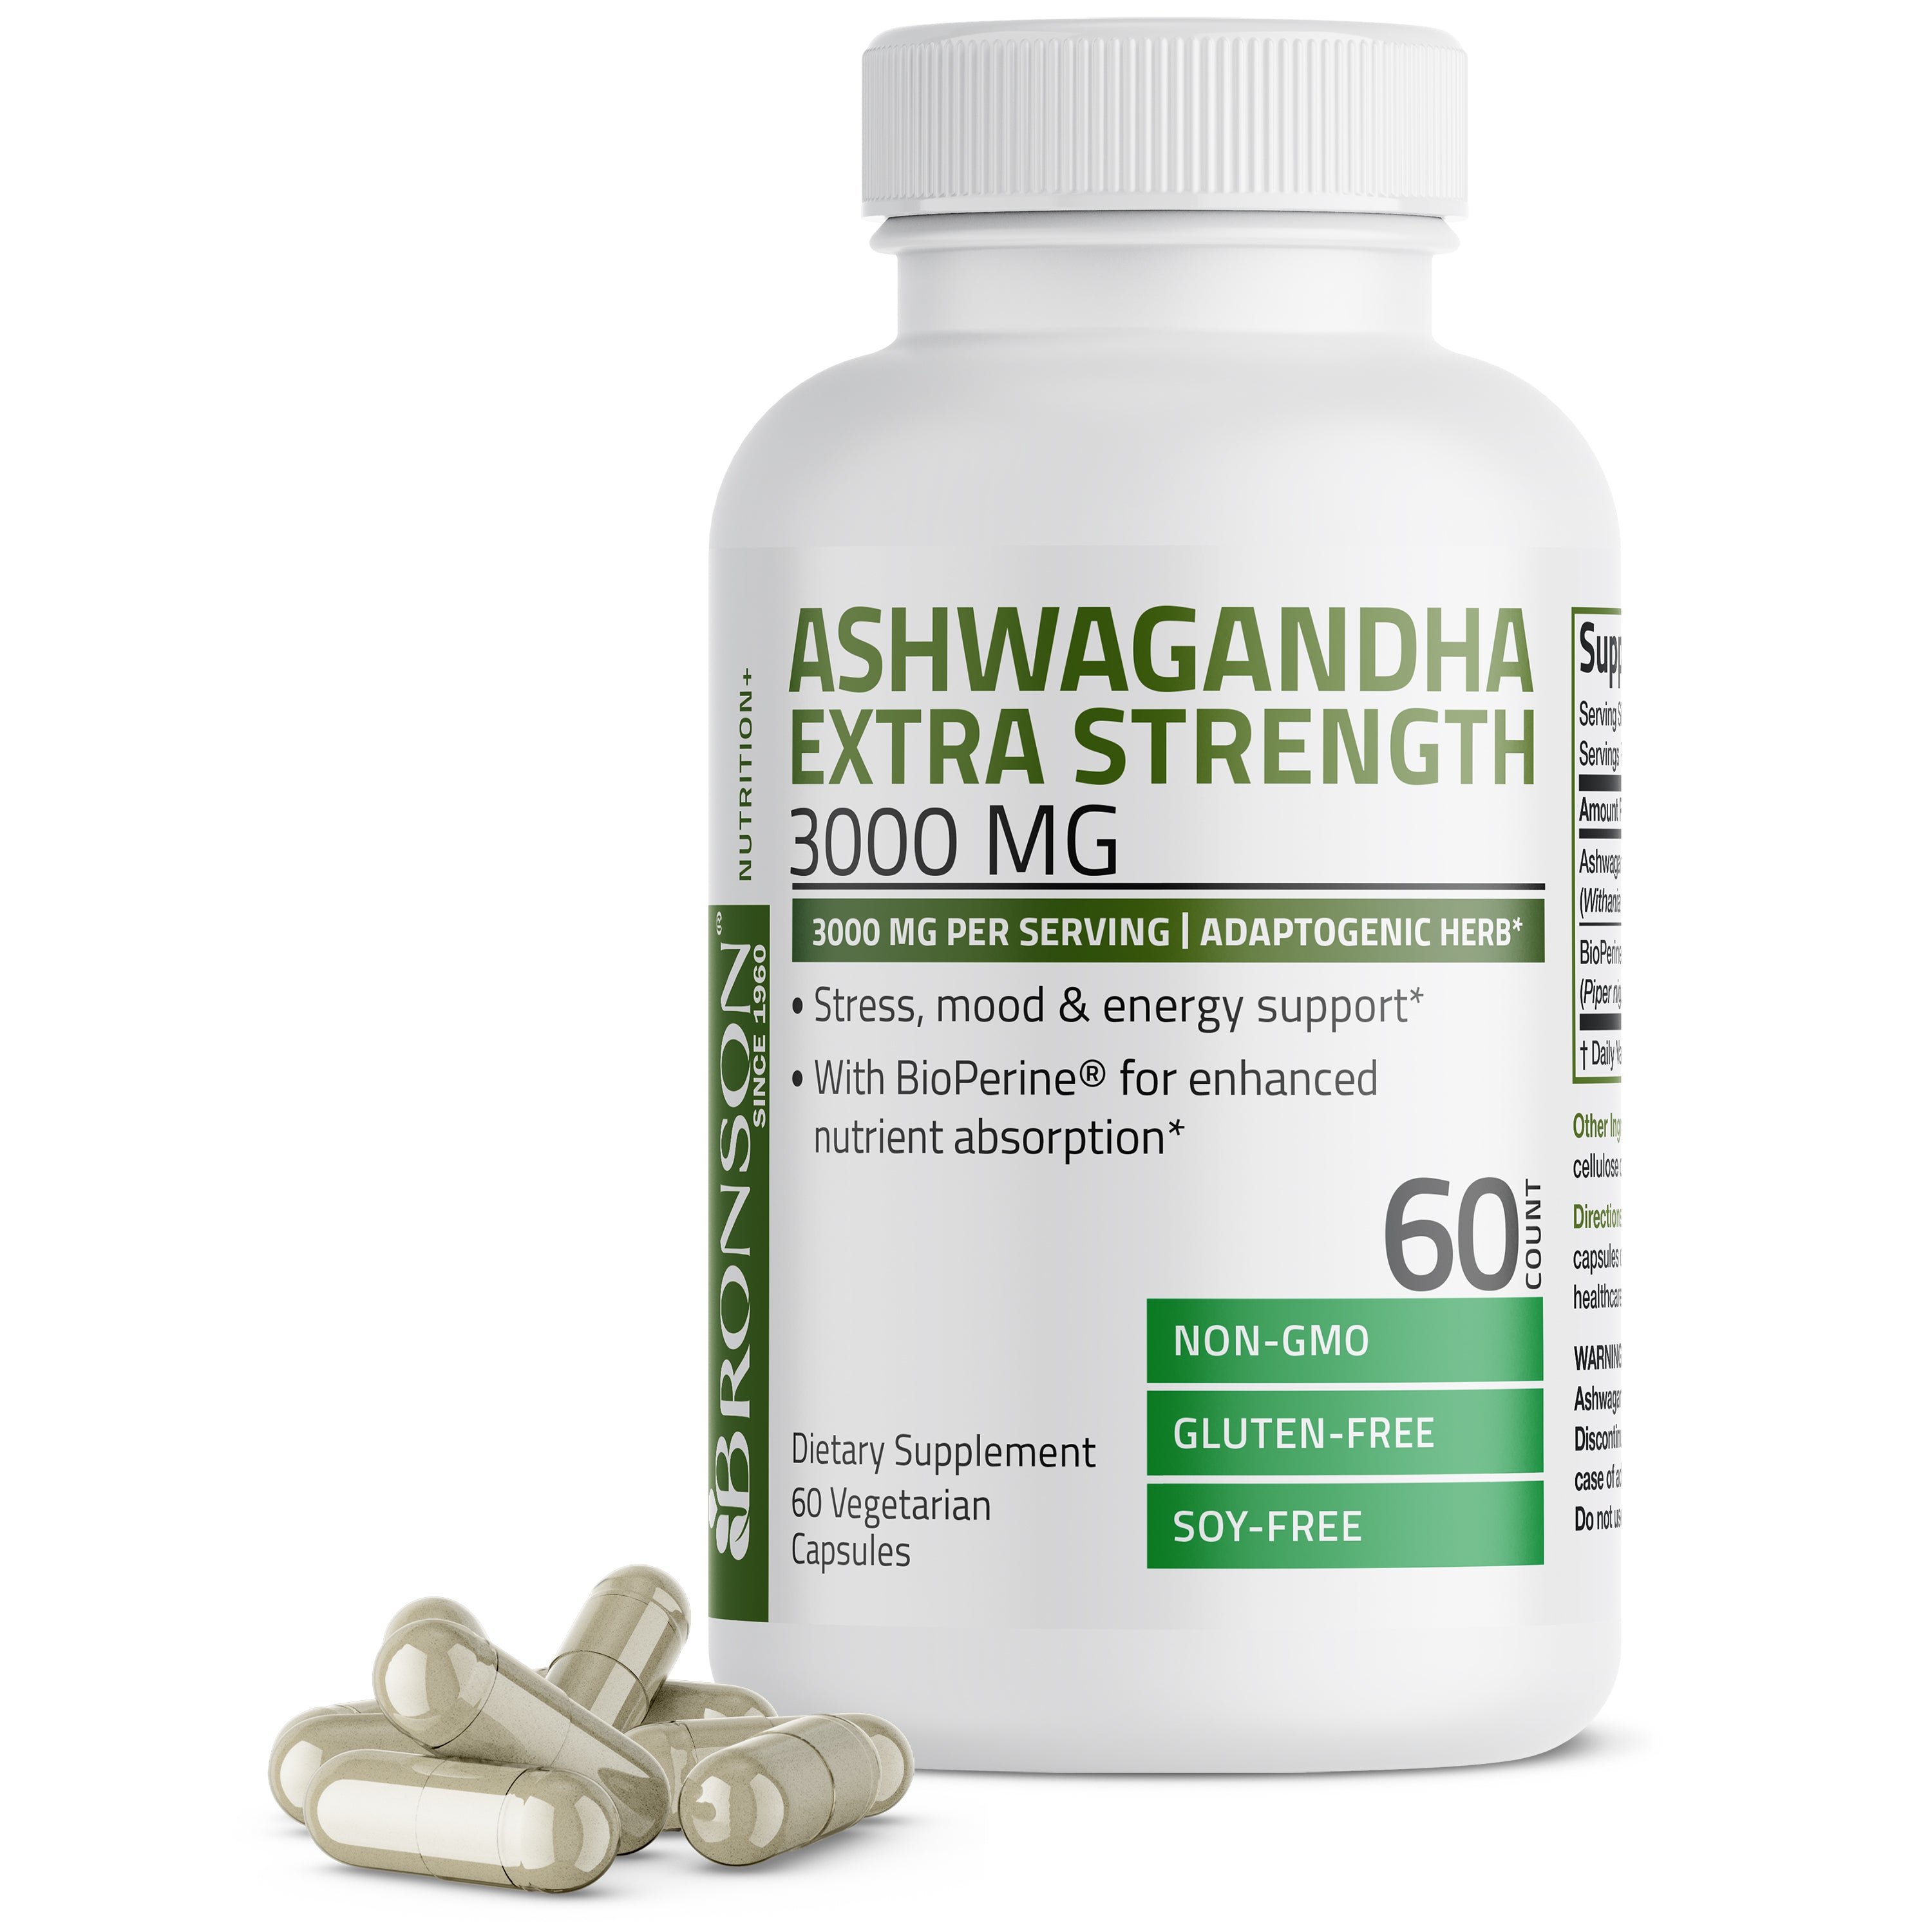 Ashwagandha Extra Strength - 3,000 mg view 1 of 6